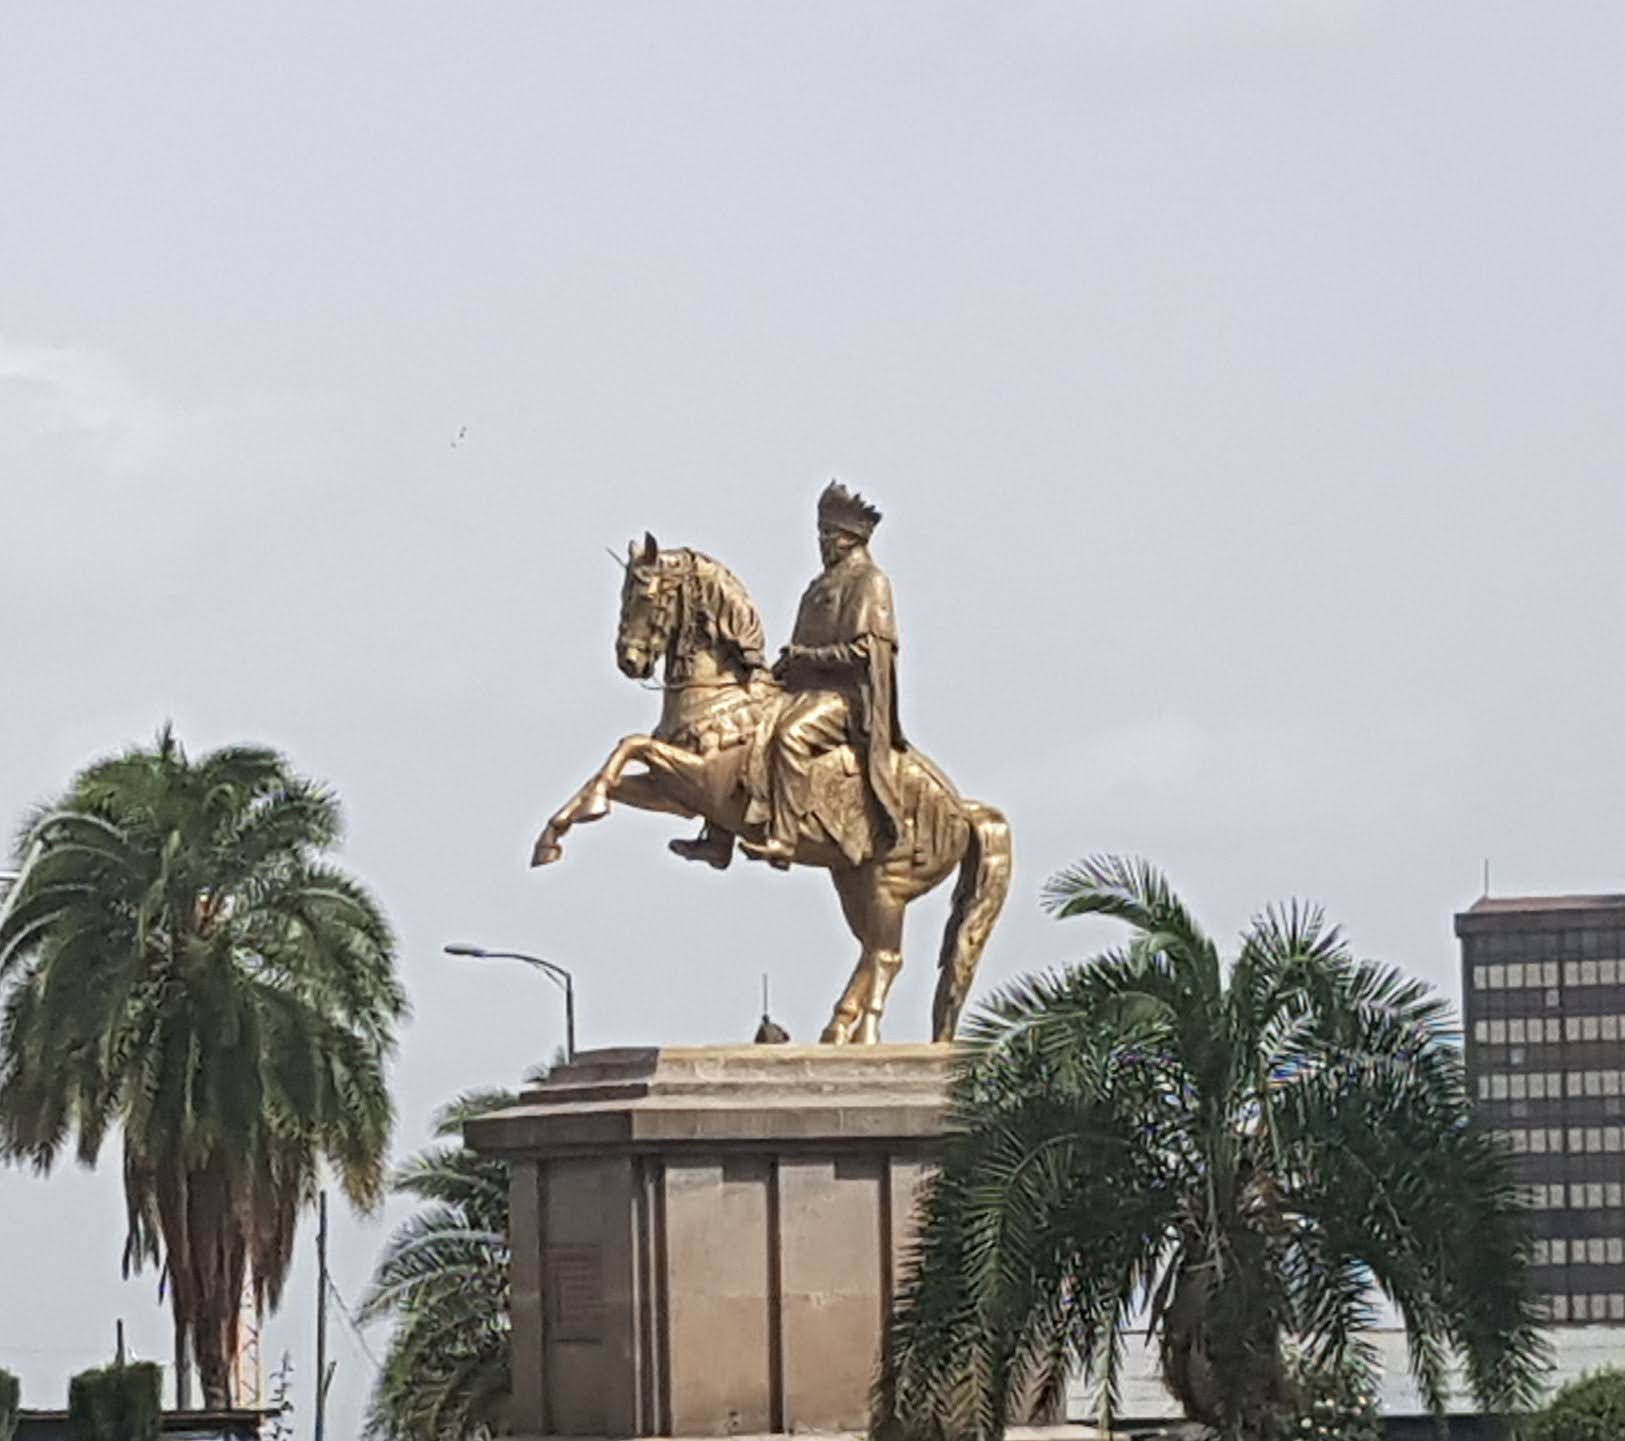 Statue of Emperor Menelik II in Addis Ababa